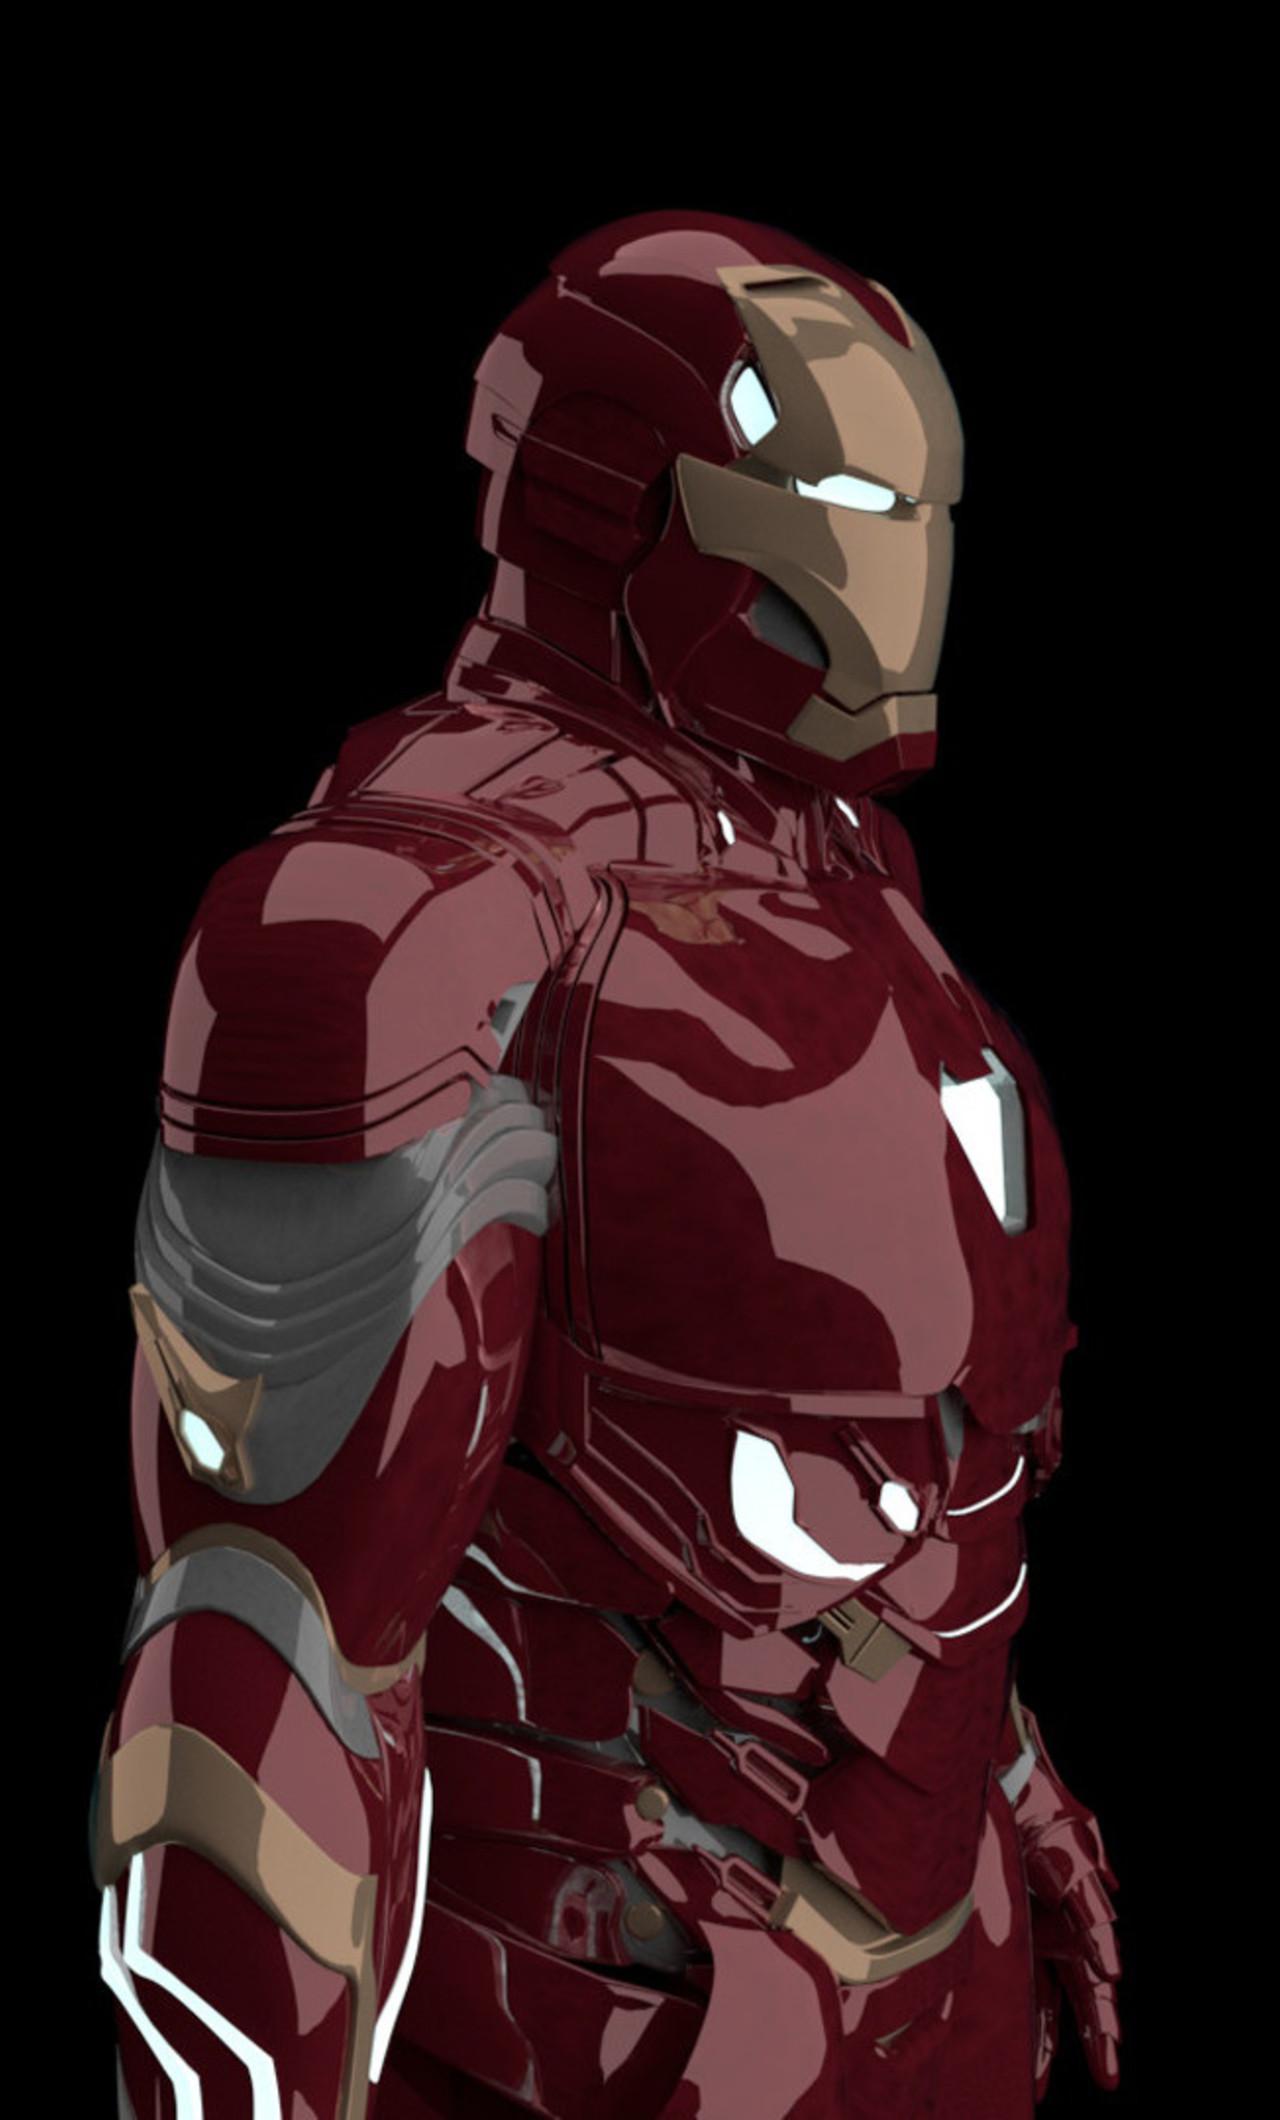 IronMan Infinity War Suit iPhone HD 4k Wallpaper